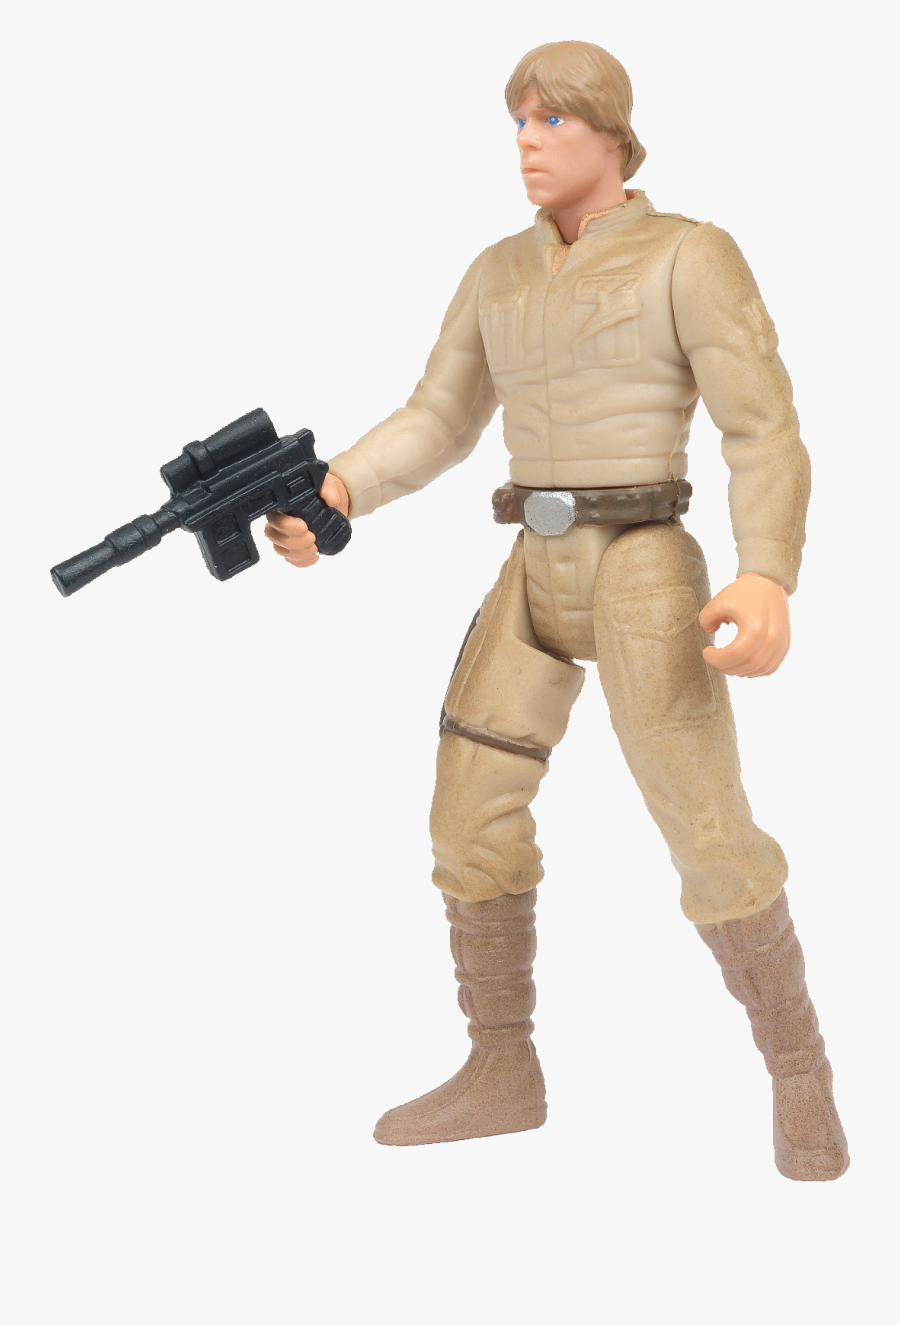 Bespin Luke Skywalker With Lightsaber And Blaster Pistol - Power Of The Force Bespin Luke, Transparent Clipart